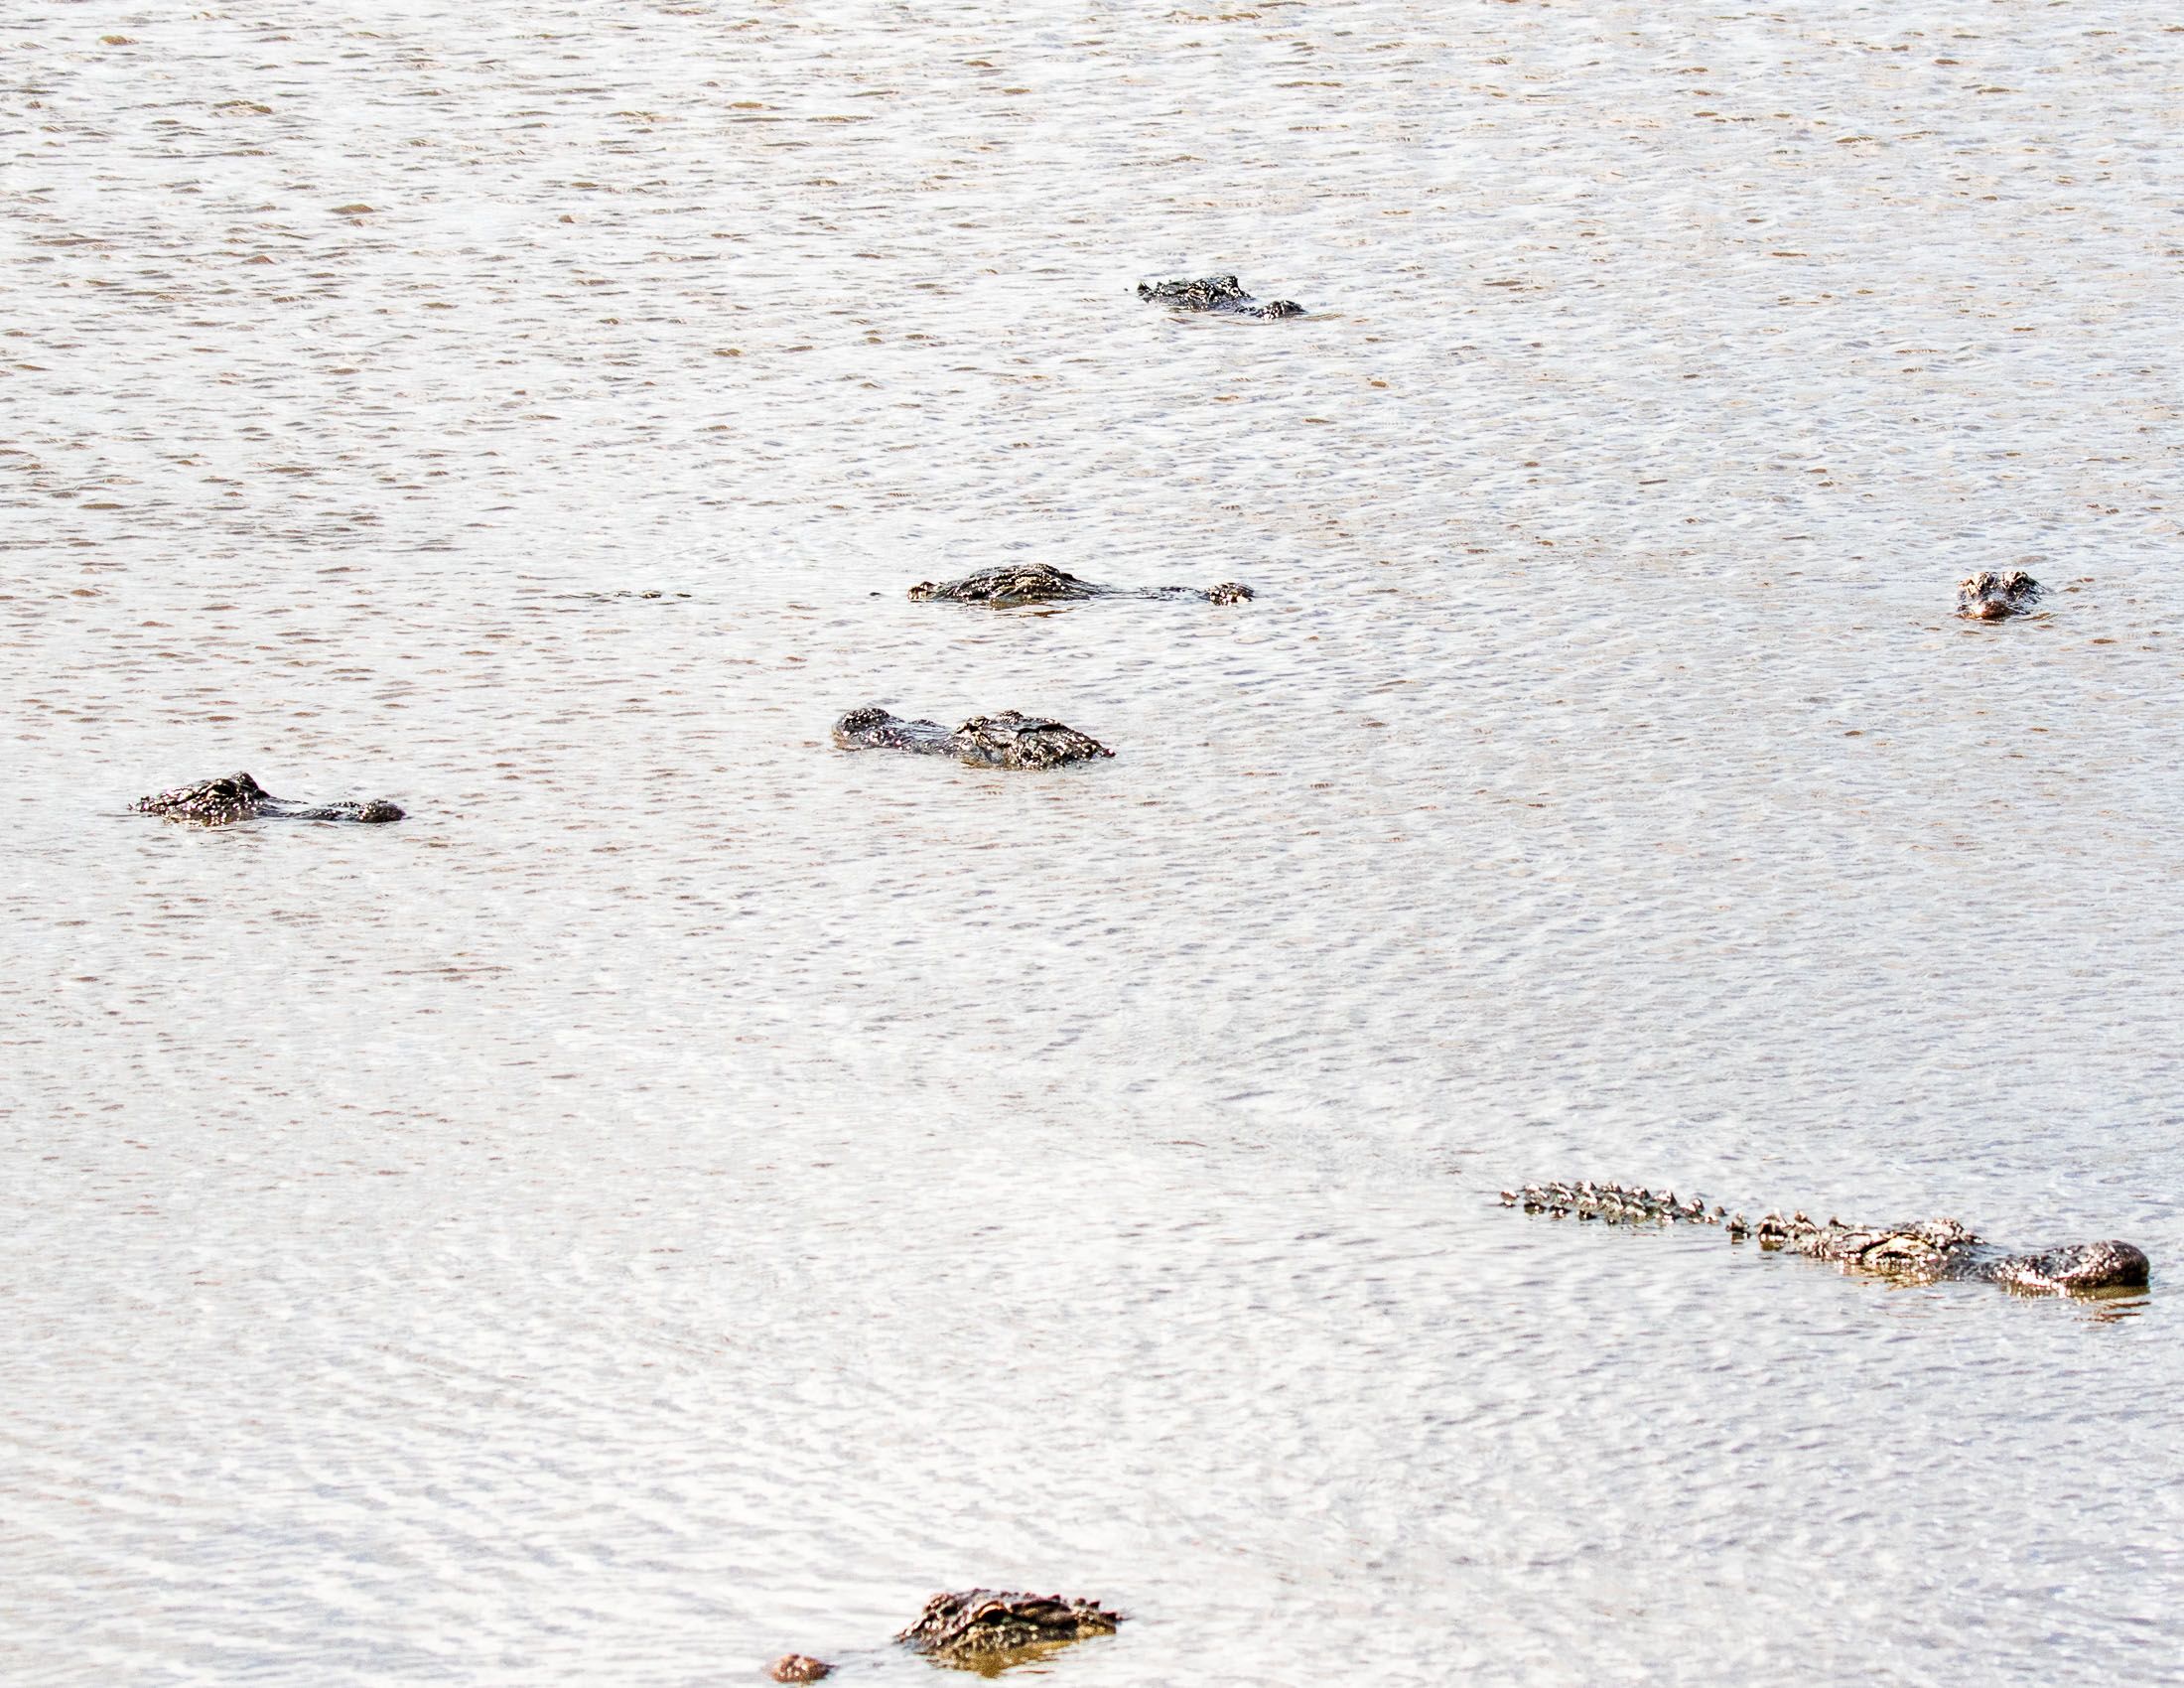 Alligators of Ace Basin, South Carolina-6.jpg